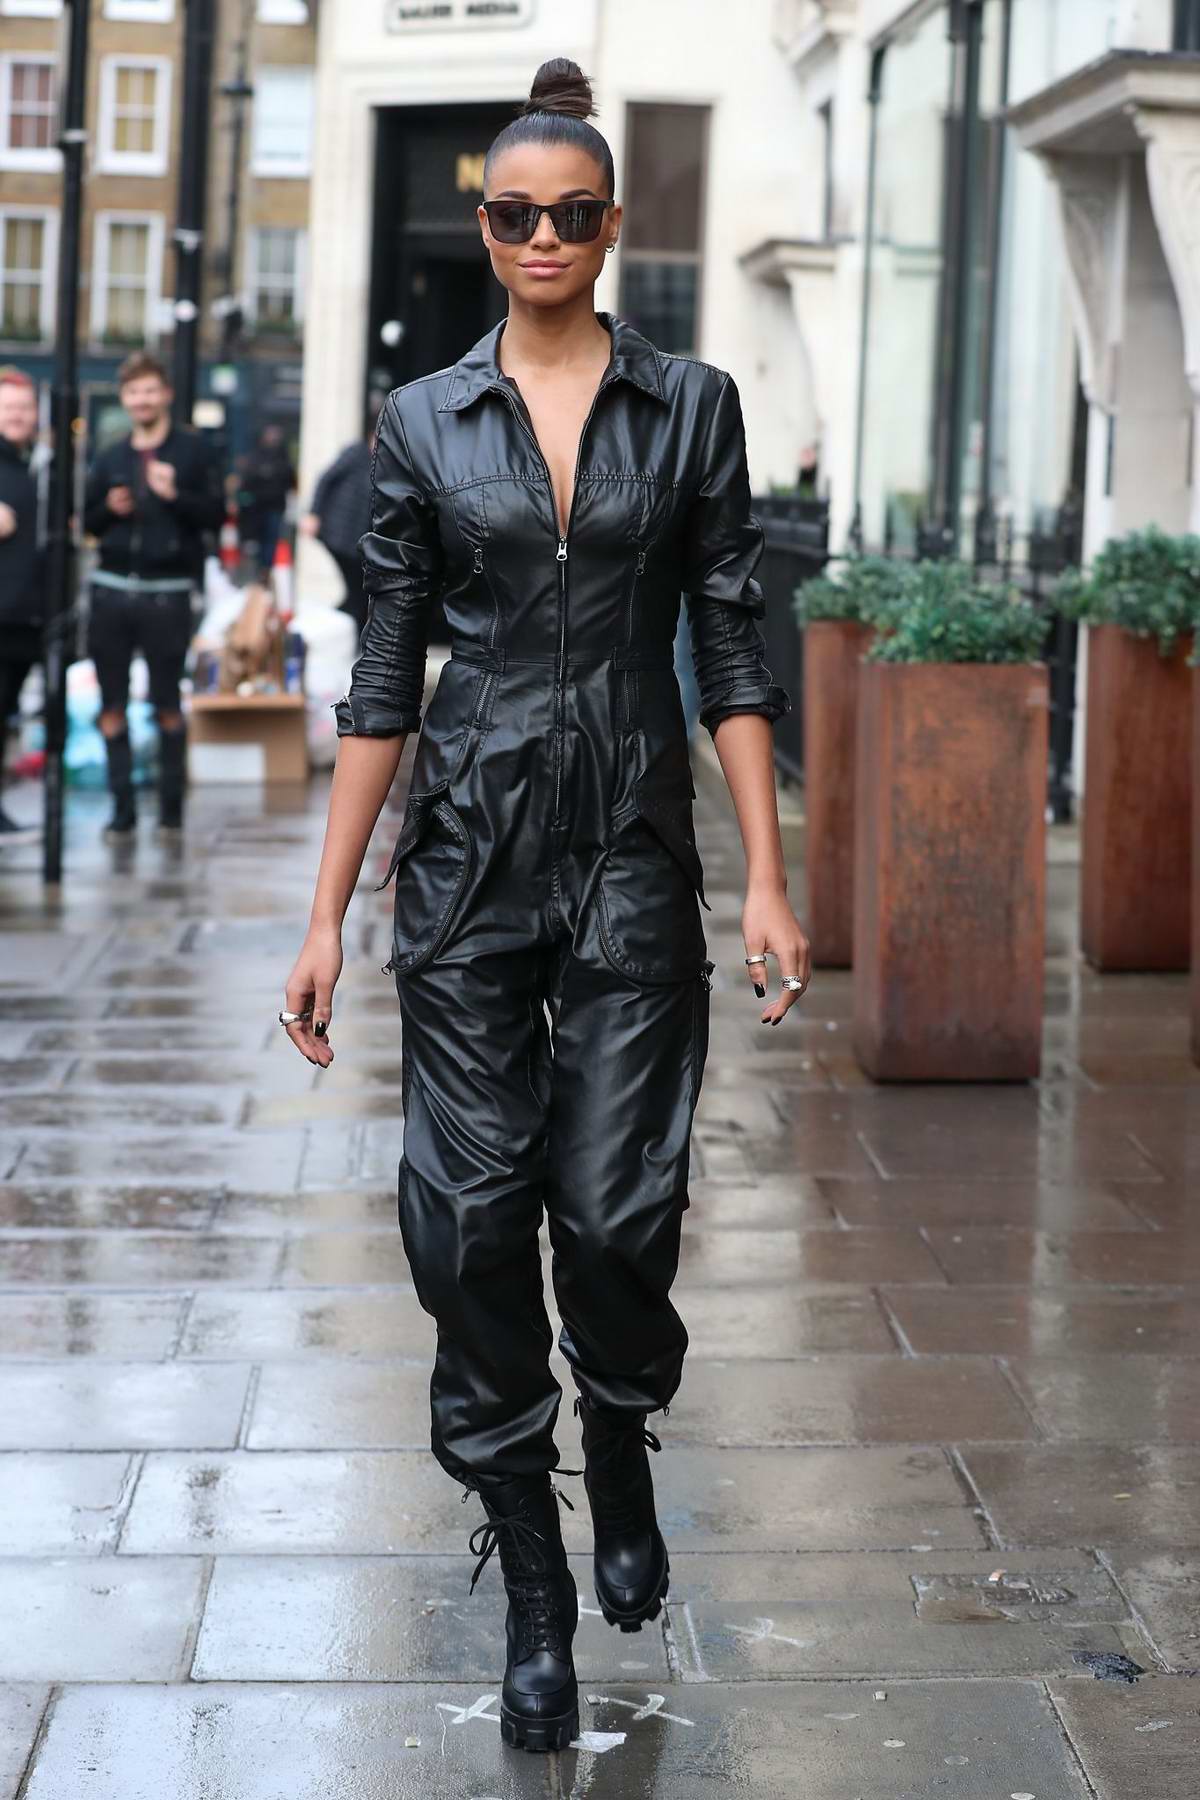 https://www.celebsfirst.com/wp-content/uploads/2019/11/ella-balinska-looks-stylish-in-a-black-leather-jumpsuit-as-she-visits-kiss-fm-radio-studios-in-london-uk-221119_7.jpg